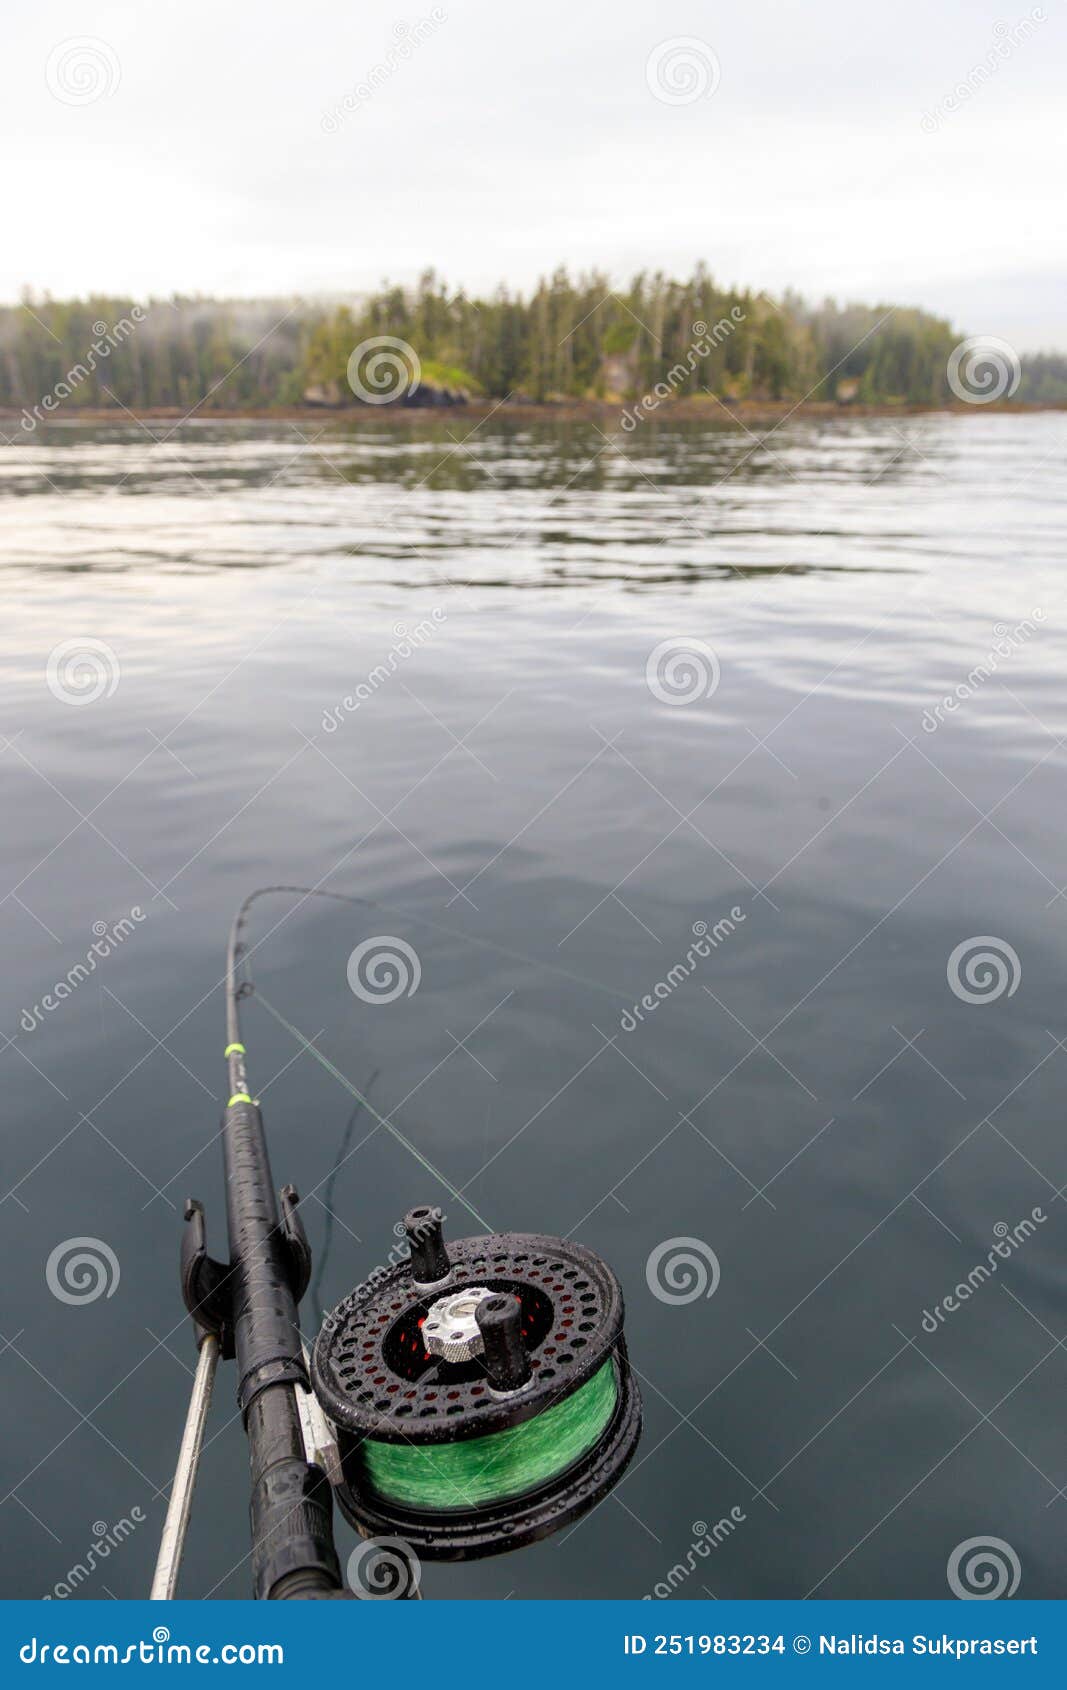 https://thumbs.dreamstime.com/z/fishing-rod-reel-holder-sport-british-columbia-boat-langara-island-located-haida-gwaii-canada-251983234.jpg